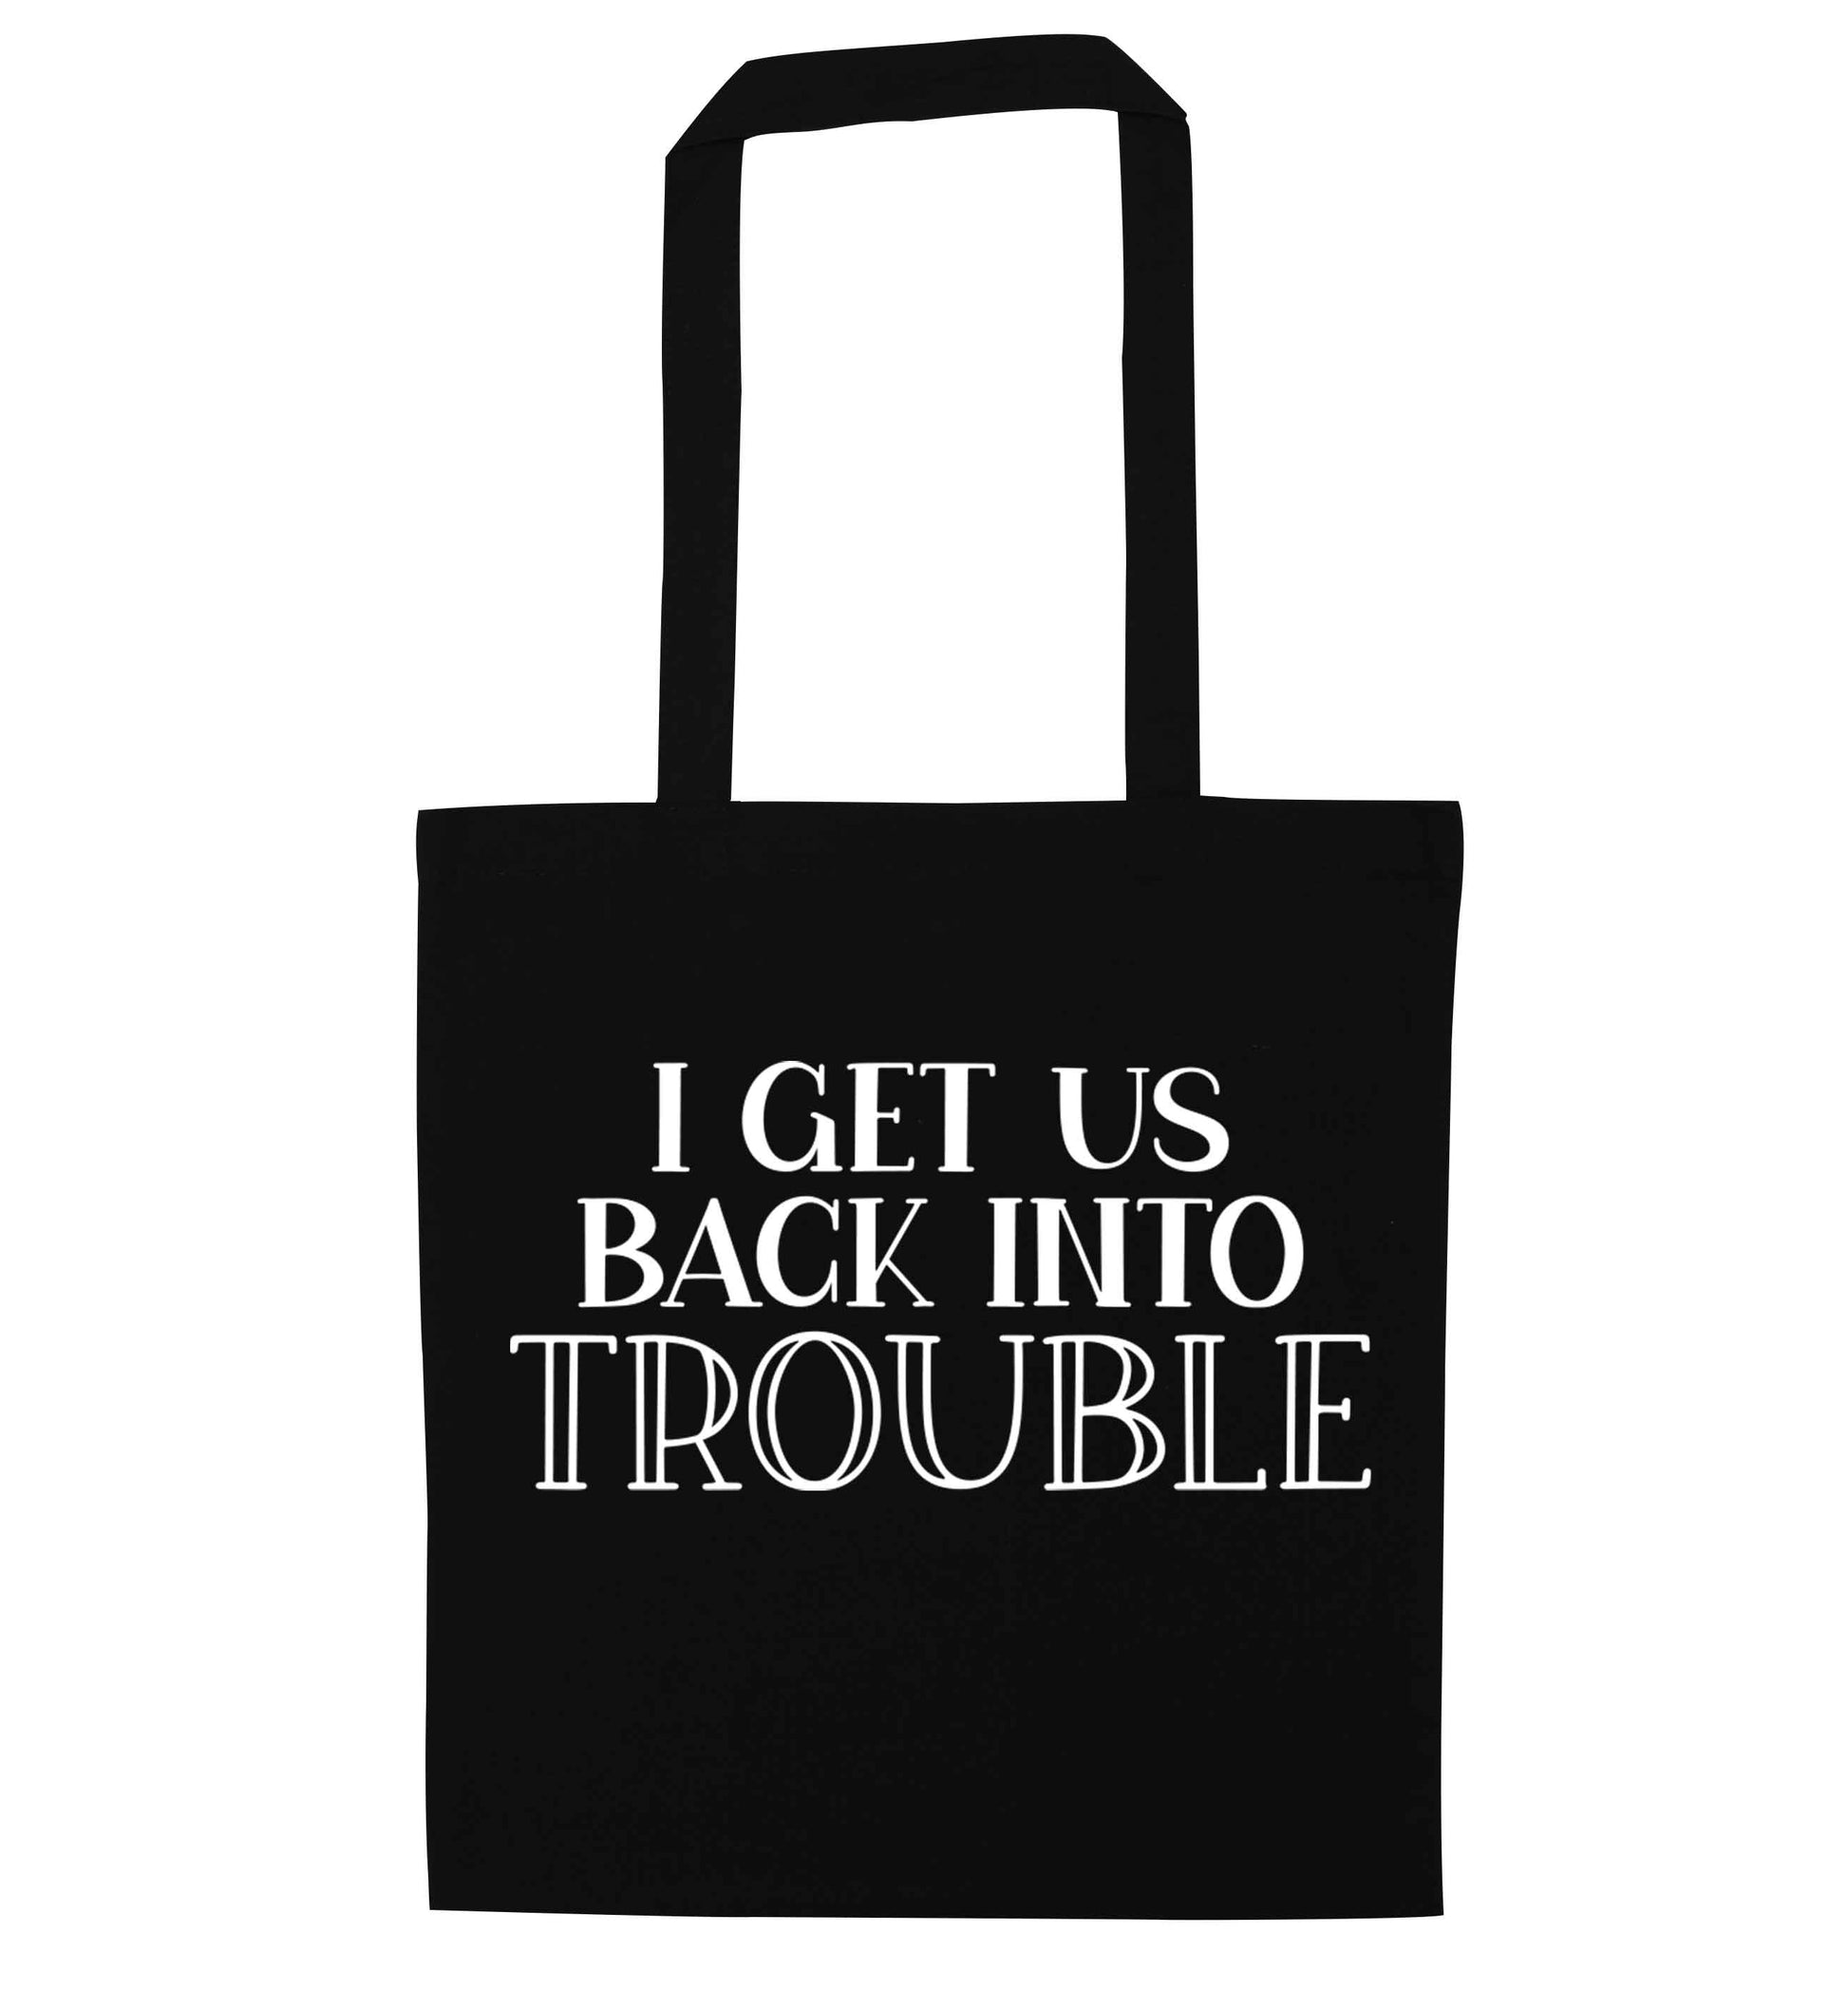 I get us back into trouble black tote bag